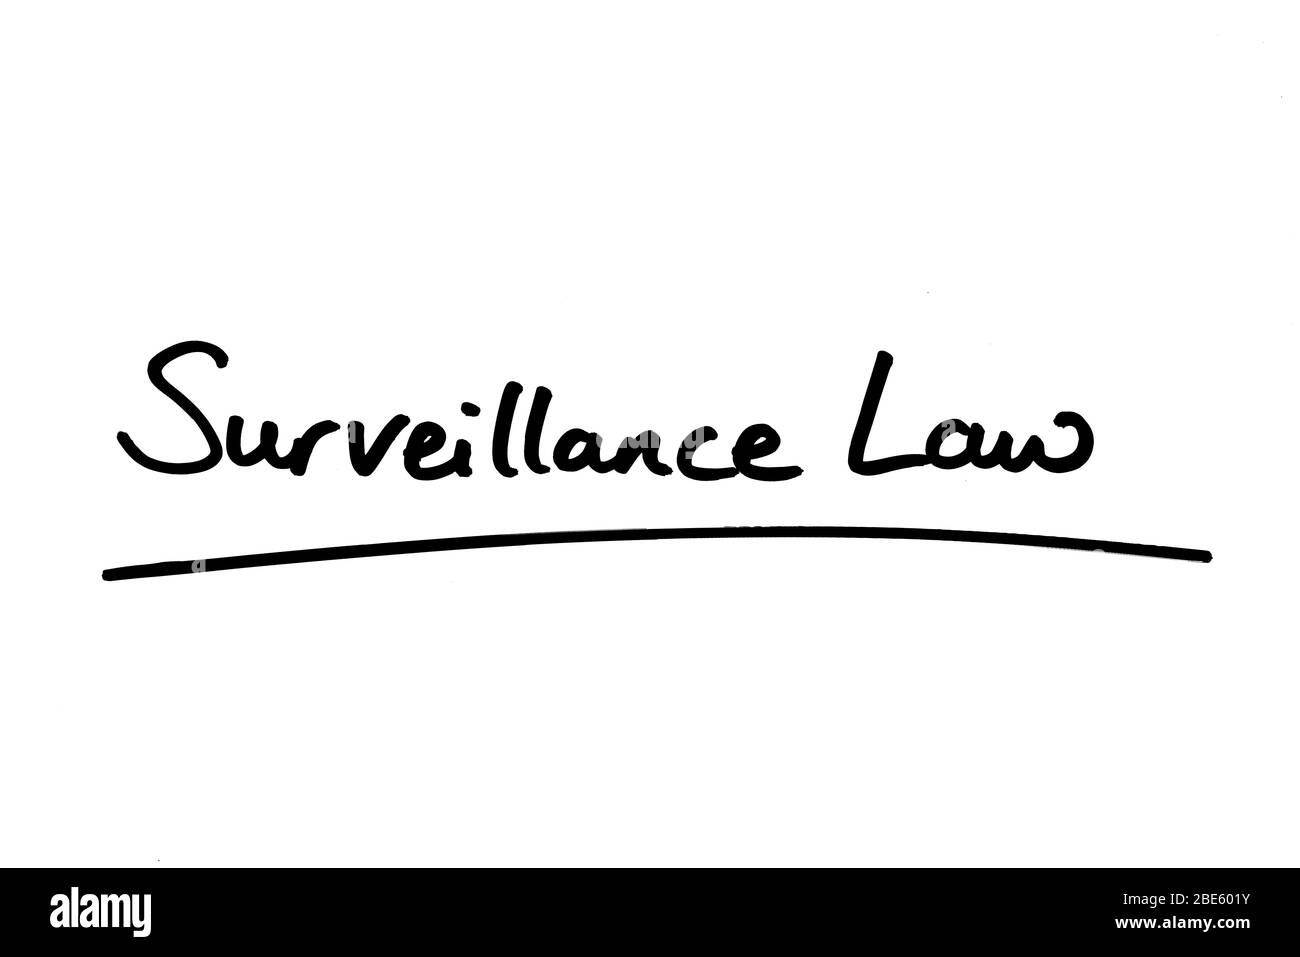 Surveillance Law handwritten on a white background. Stock Photo